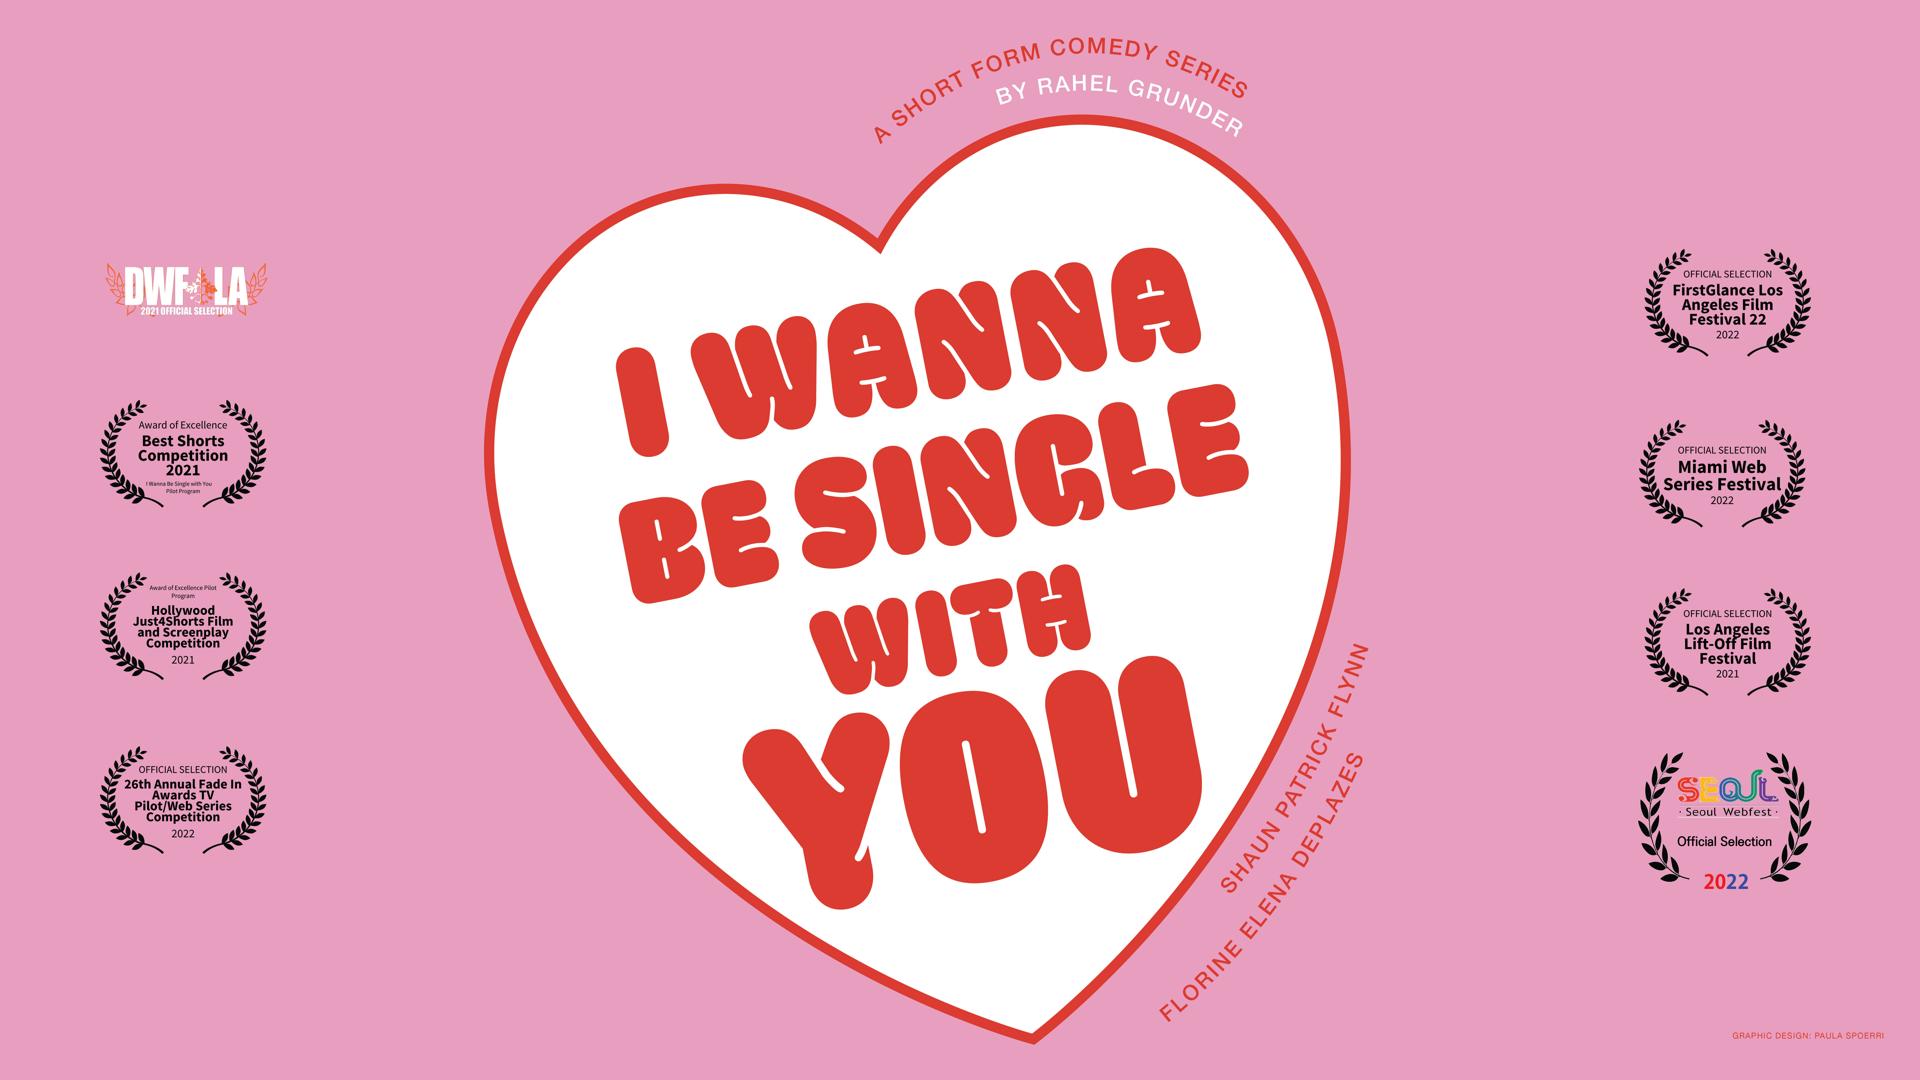 I Wanna Be Single with You